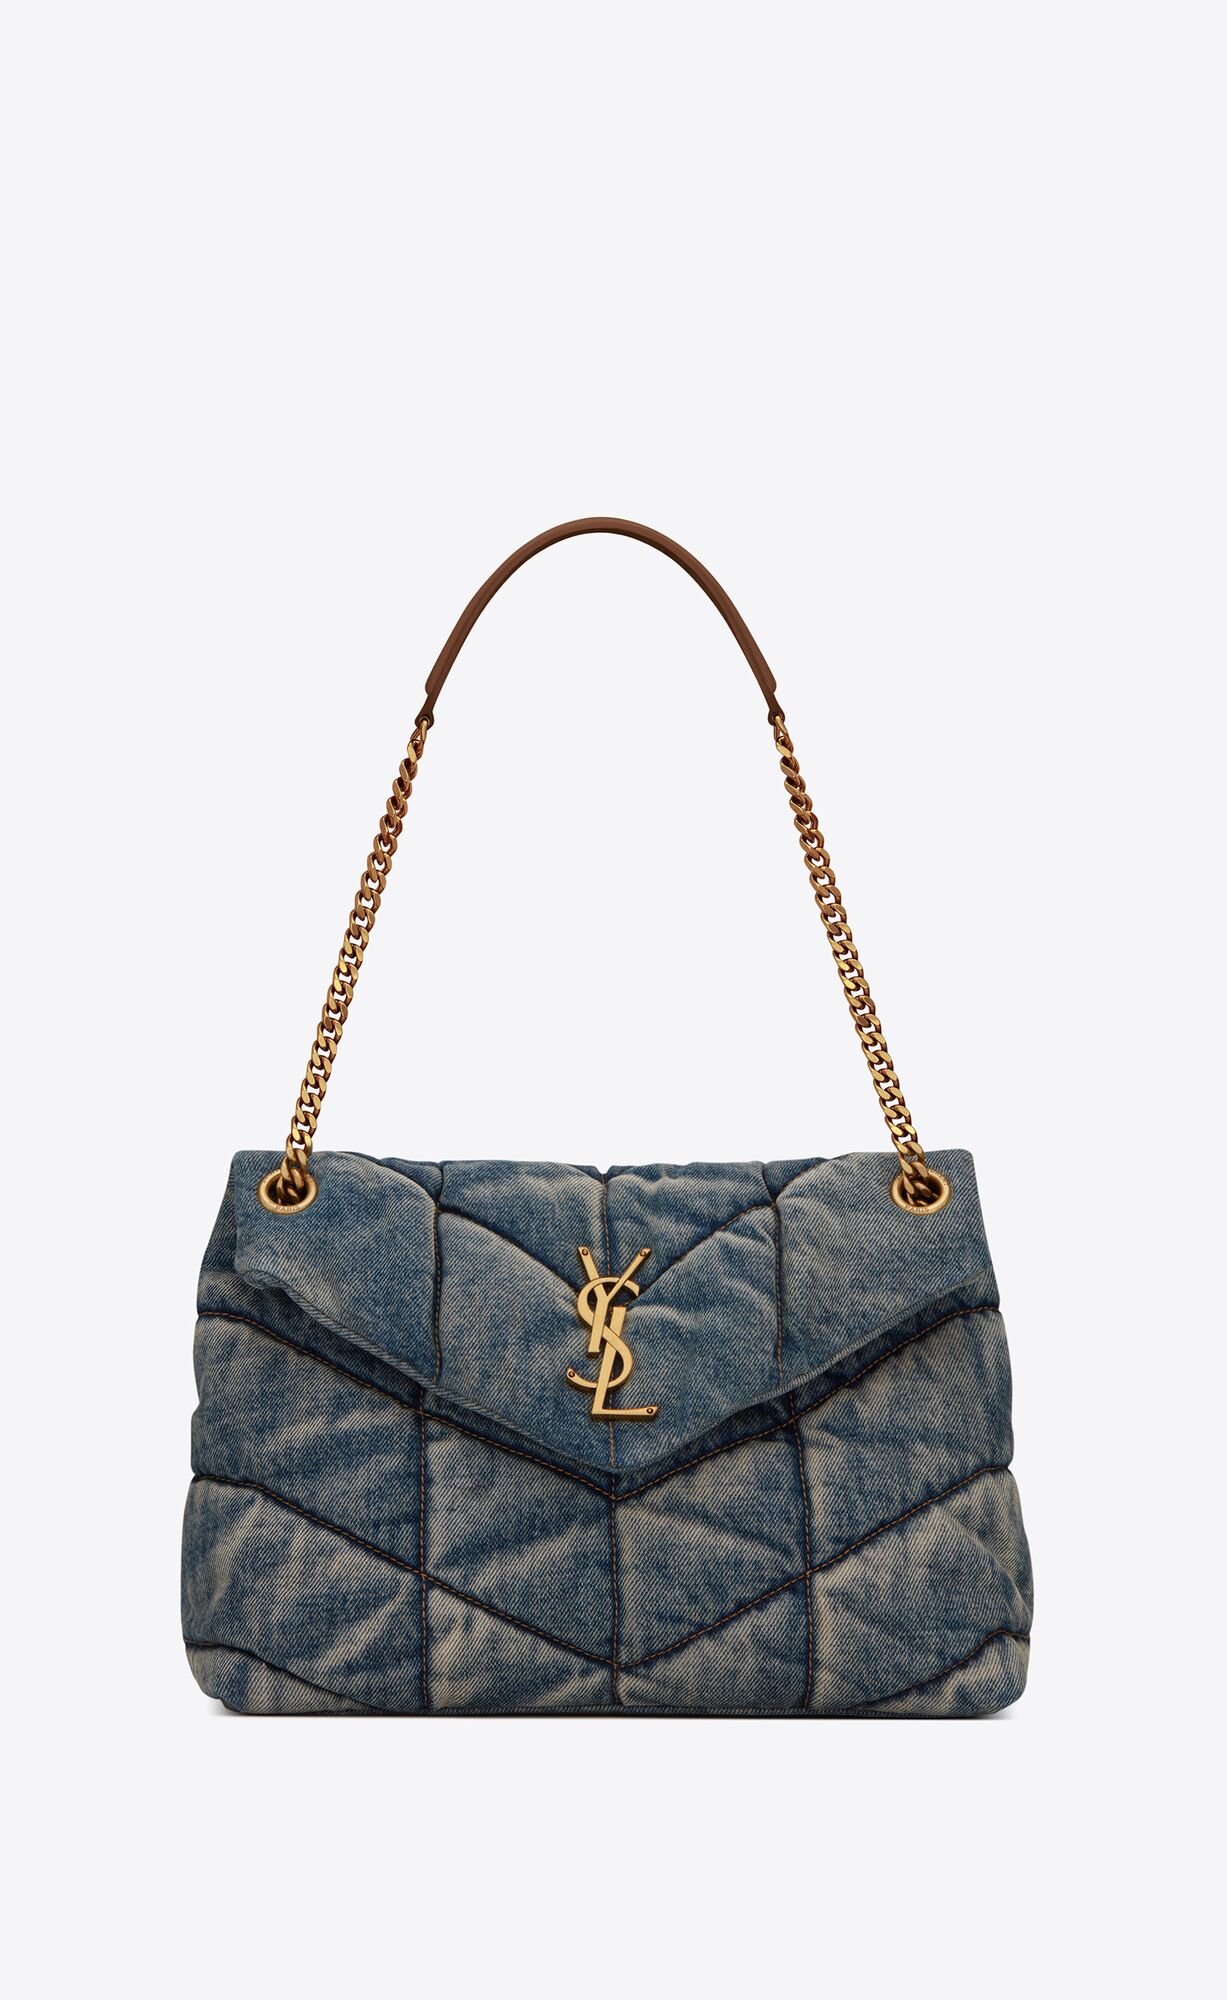 Should I Keep My Saint Laurent Bag? - PurseBlog